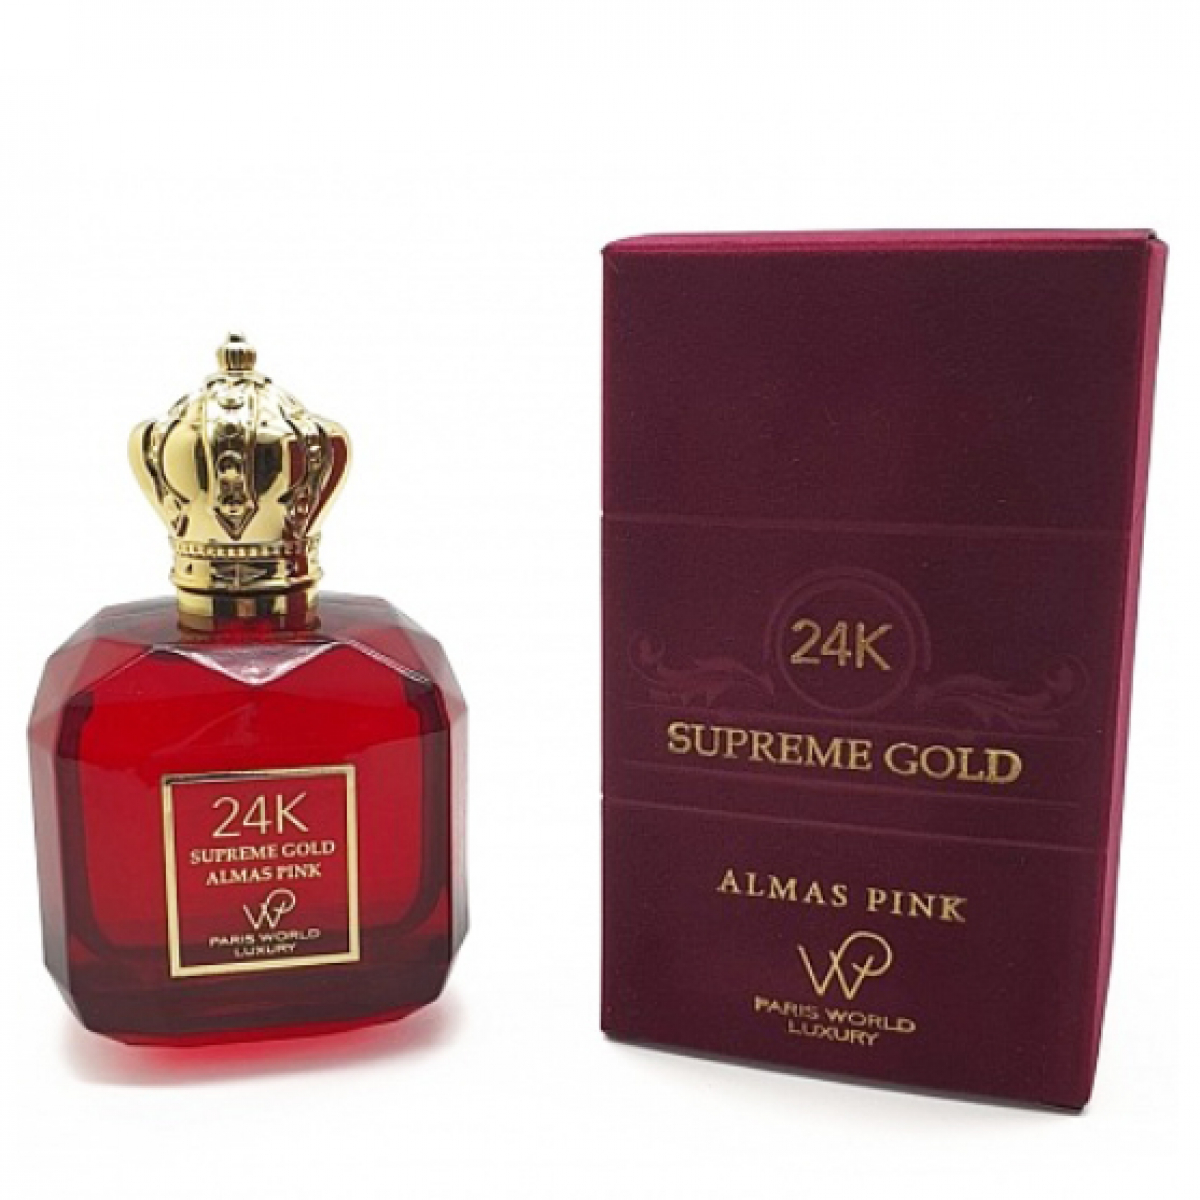 Luxury 24k supreme rouge. Paris World Luxury 24k Supreme Gold Almas Pink. Духи Суприм Голд 24к. Paris World Luxury 24k Supreme rouge. 24k Supreme Gold Almas Pink EDP.